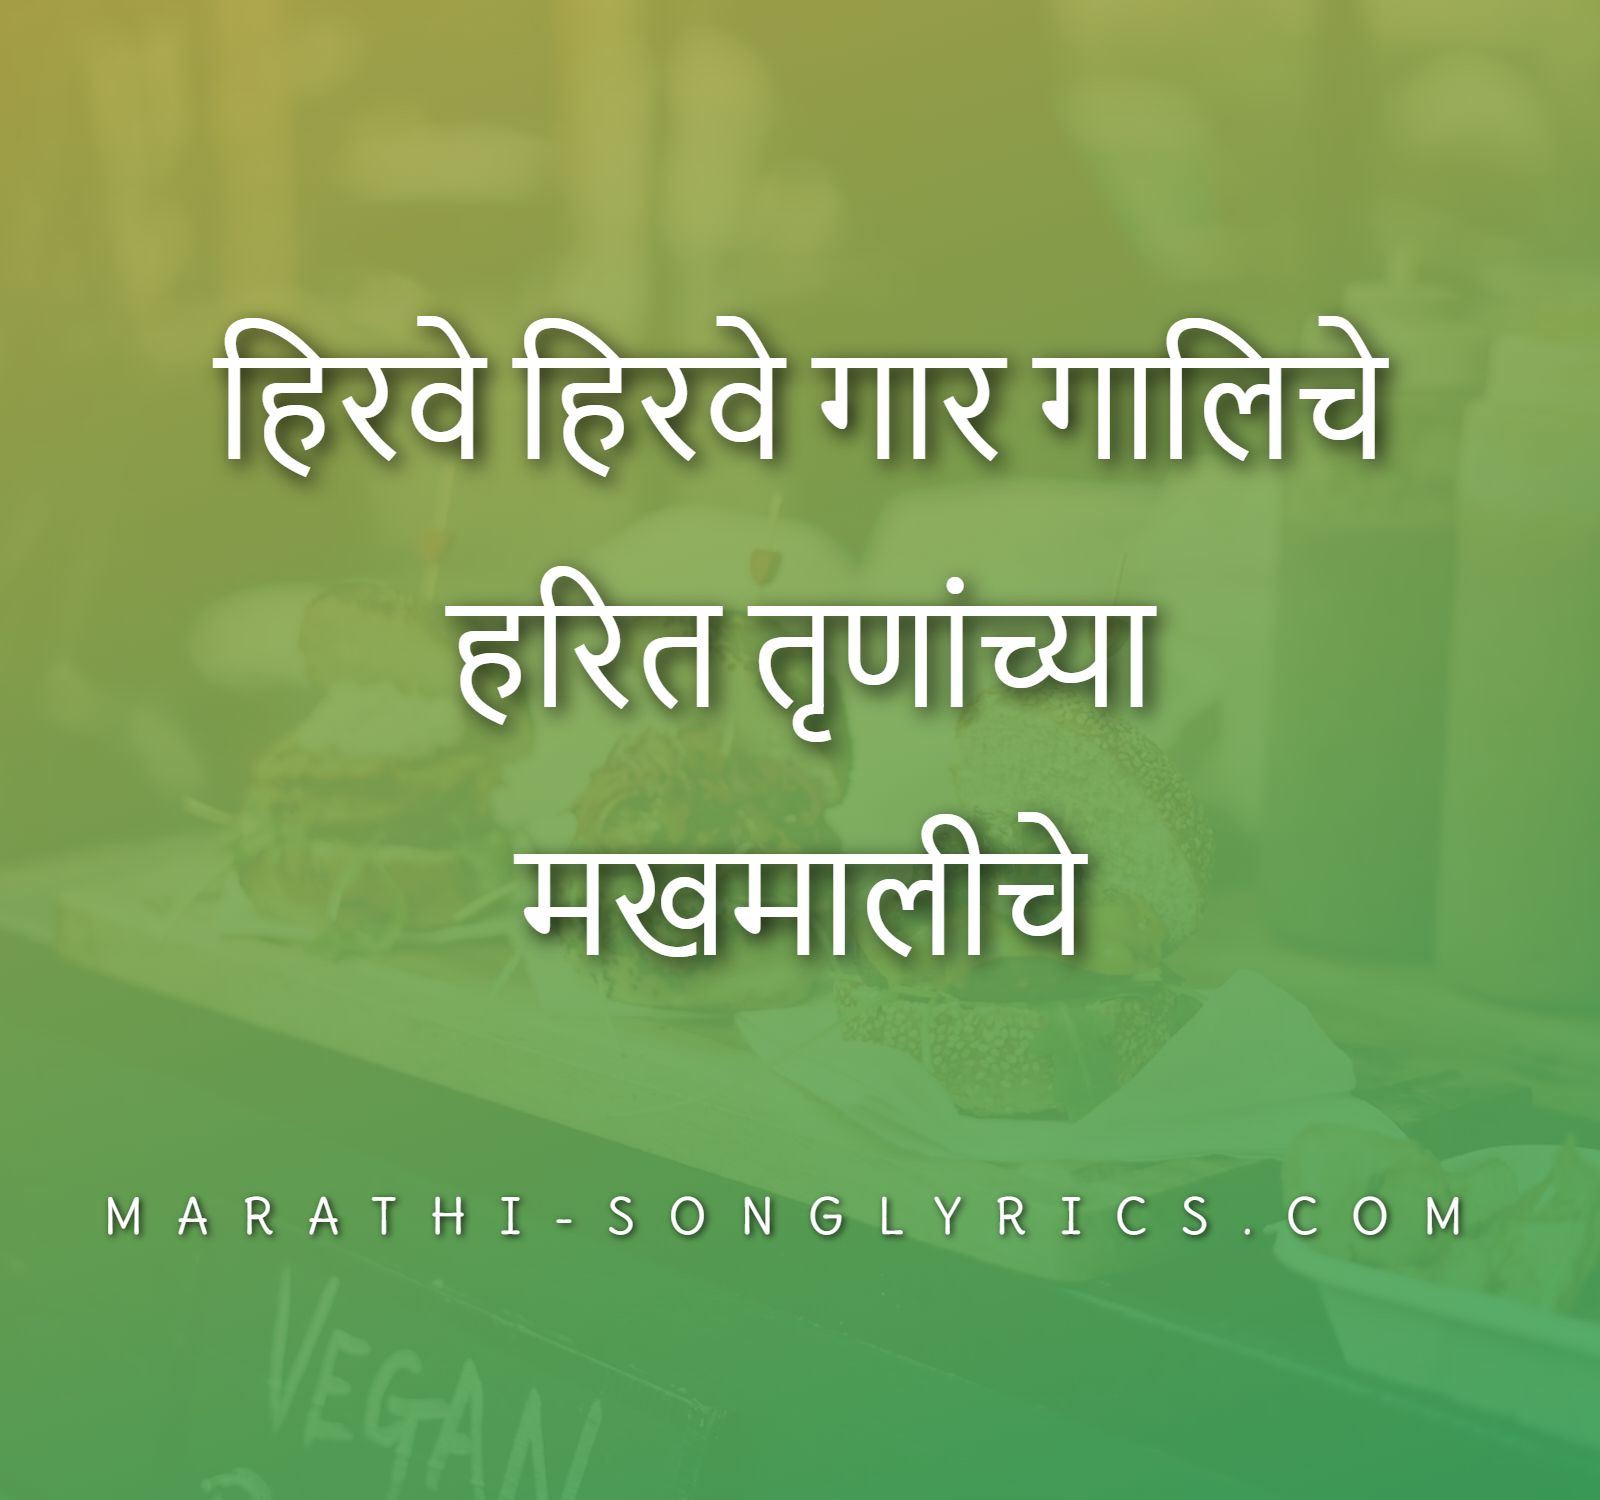 Hirve Hirve Lyrics in Marathi | Phulrani Lyrics